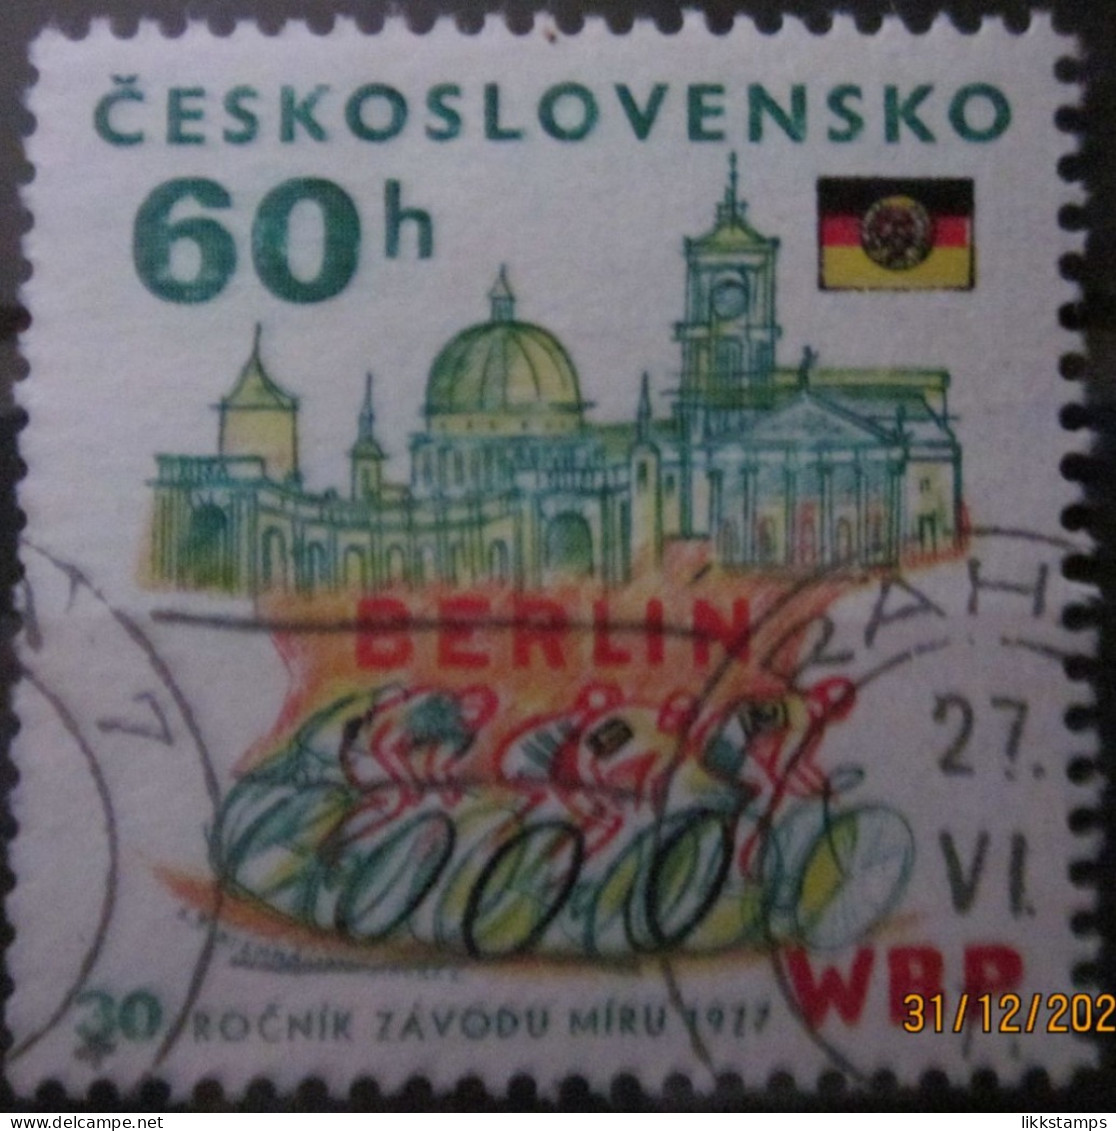 CZECHOSLOVAKIA 1977 ~ S.G. 2333, ~ THE 30th ANNIVERSARY OF THE PEACE CYCLE RACE. ~ VFU #03195 - Oblitérés